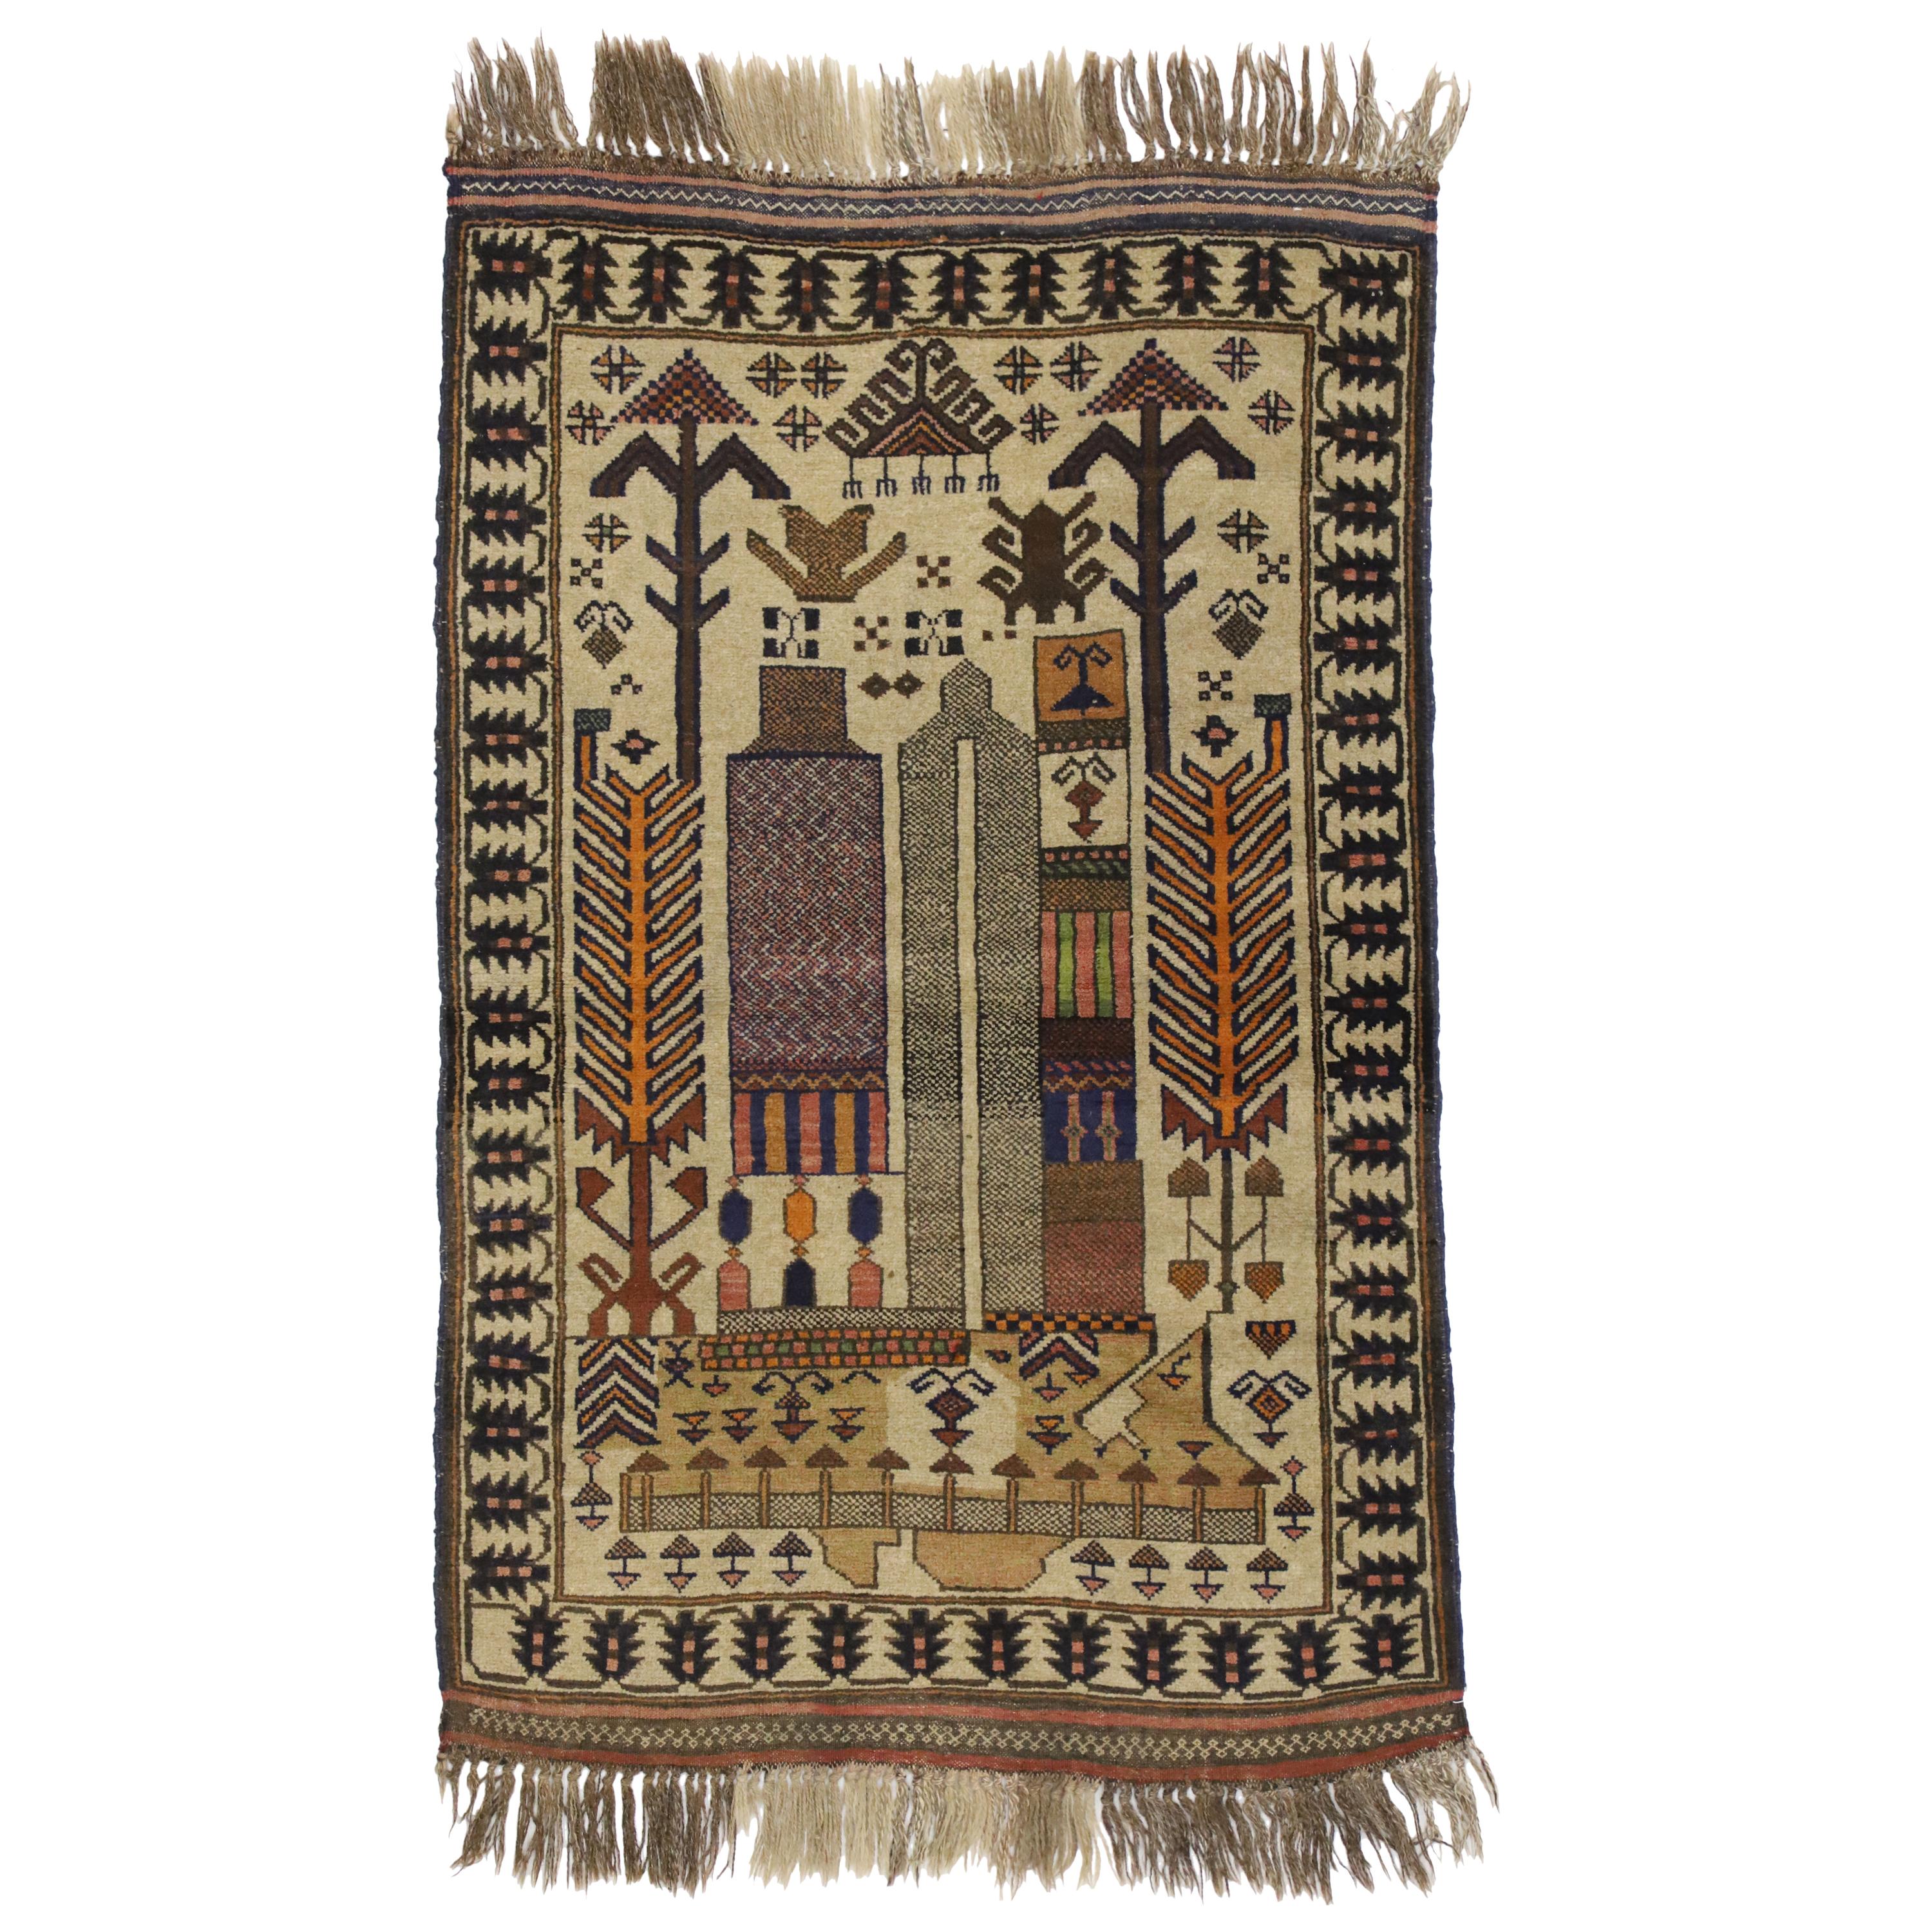 Pretty old Antique hand made afghan war rug size 182 cm x 130 cm